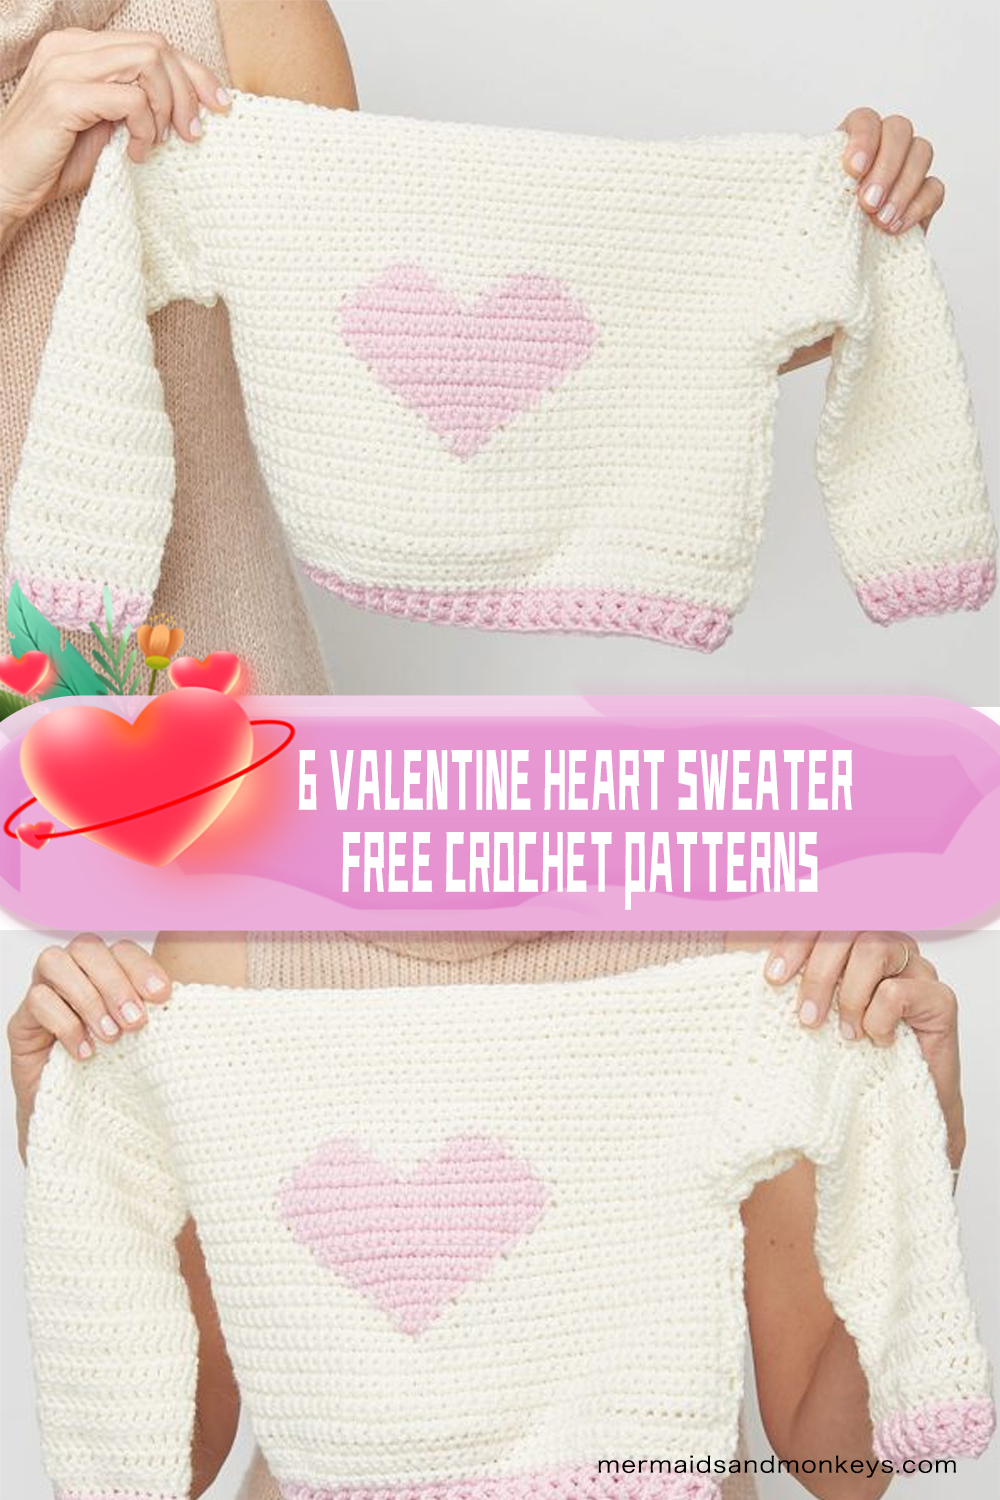 7 Valentine Heart Sweater FREE Crochet Patterns